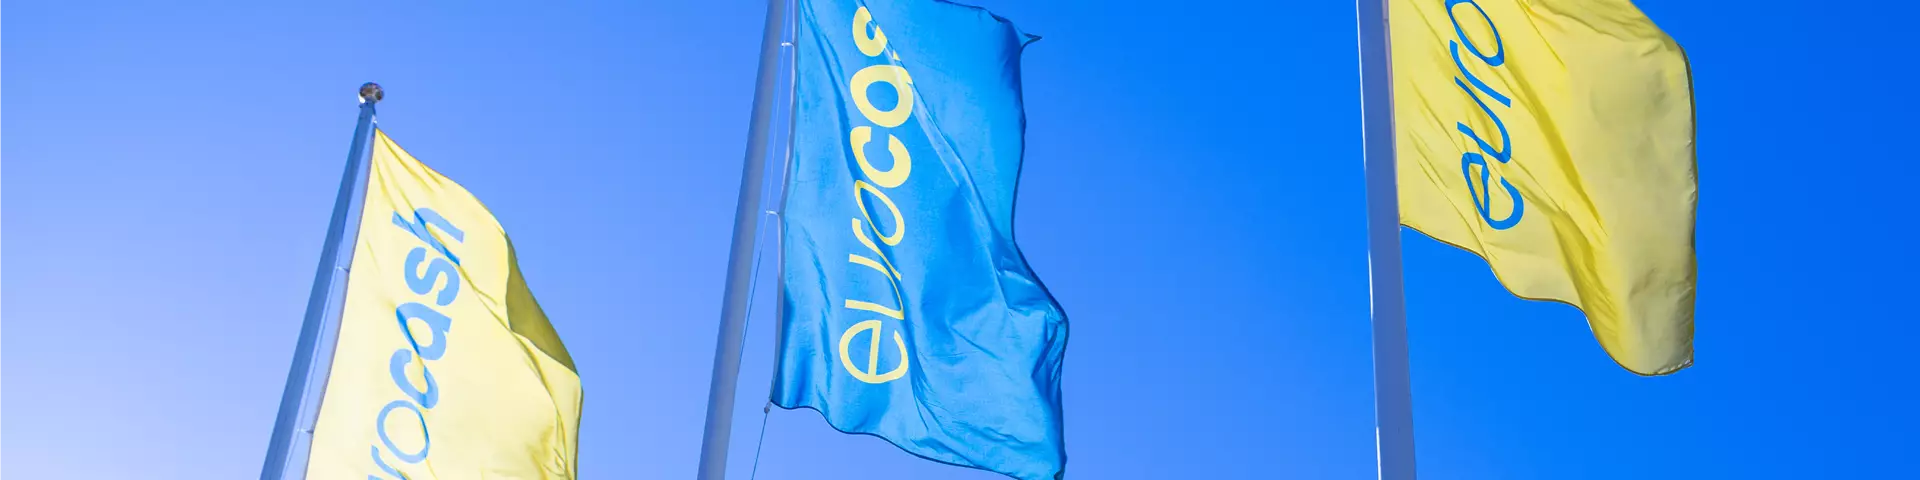 Eurocash-flaggor som vajar i vinden mot en blå himmel.